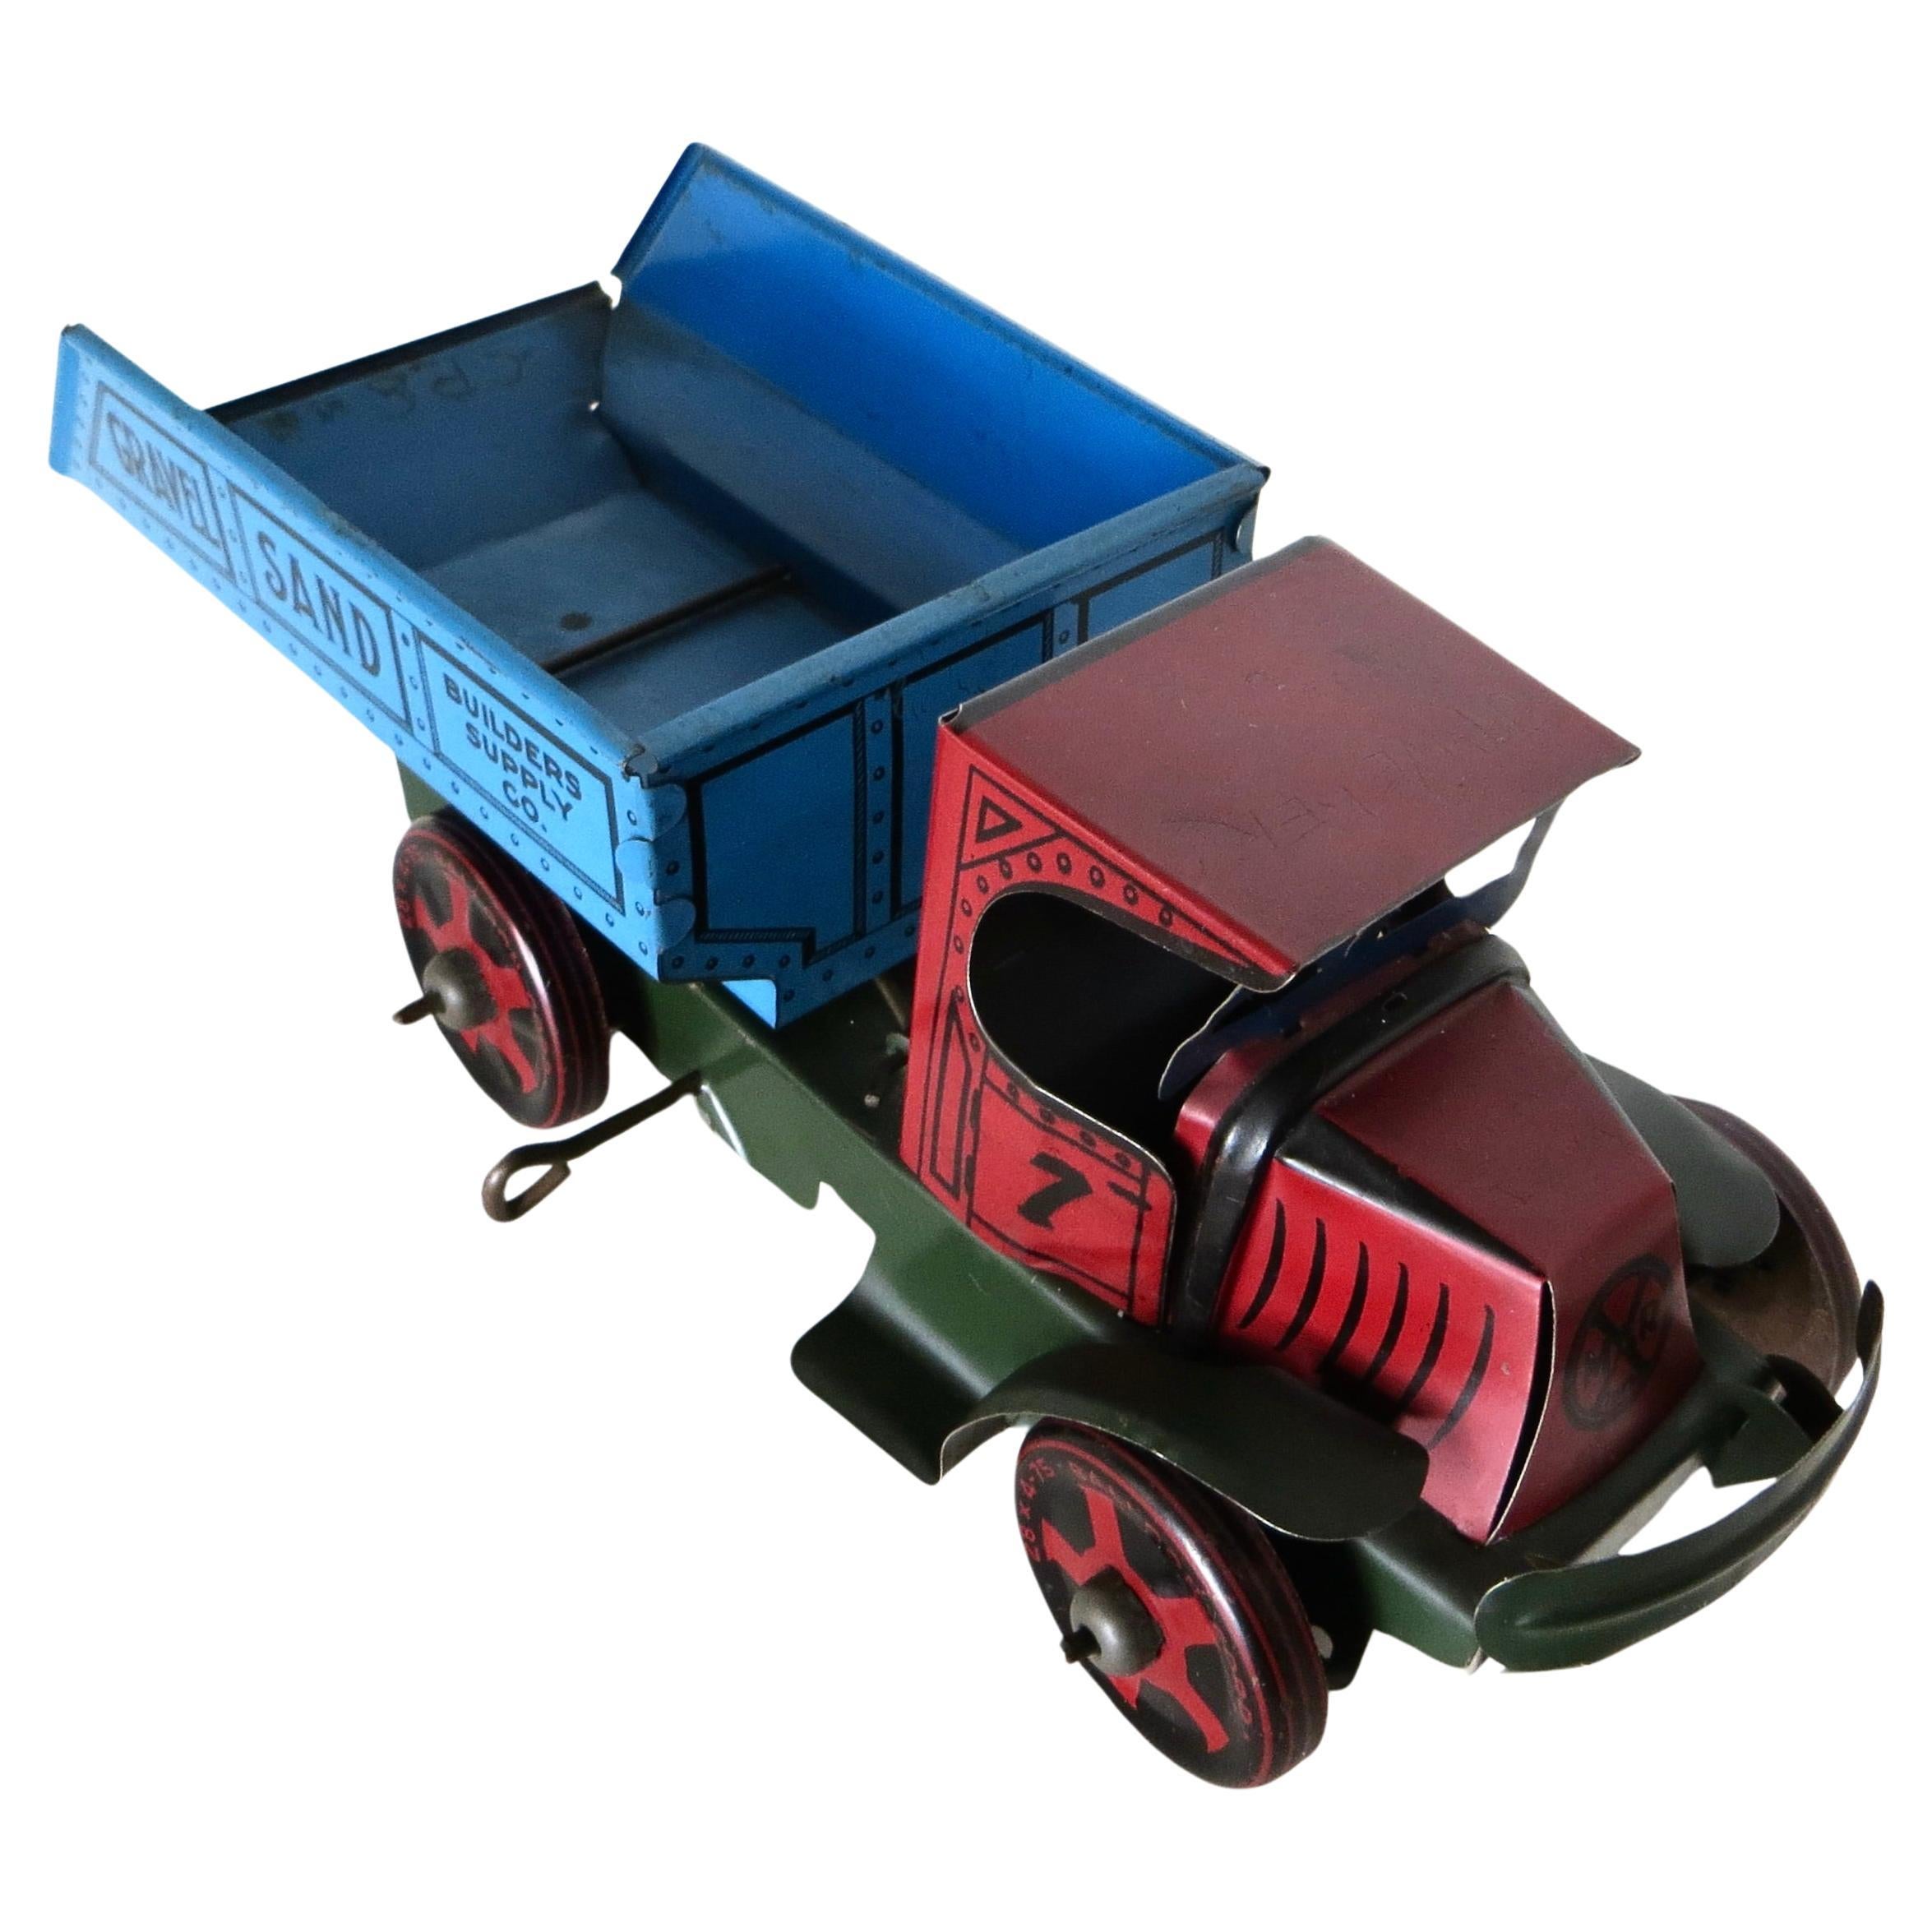 Truck Wind-Up Dump Truck de The Marx Toy Company, N.Y. Américain vers 1930 en vente